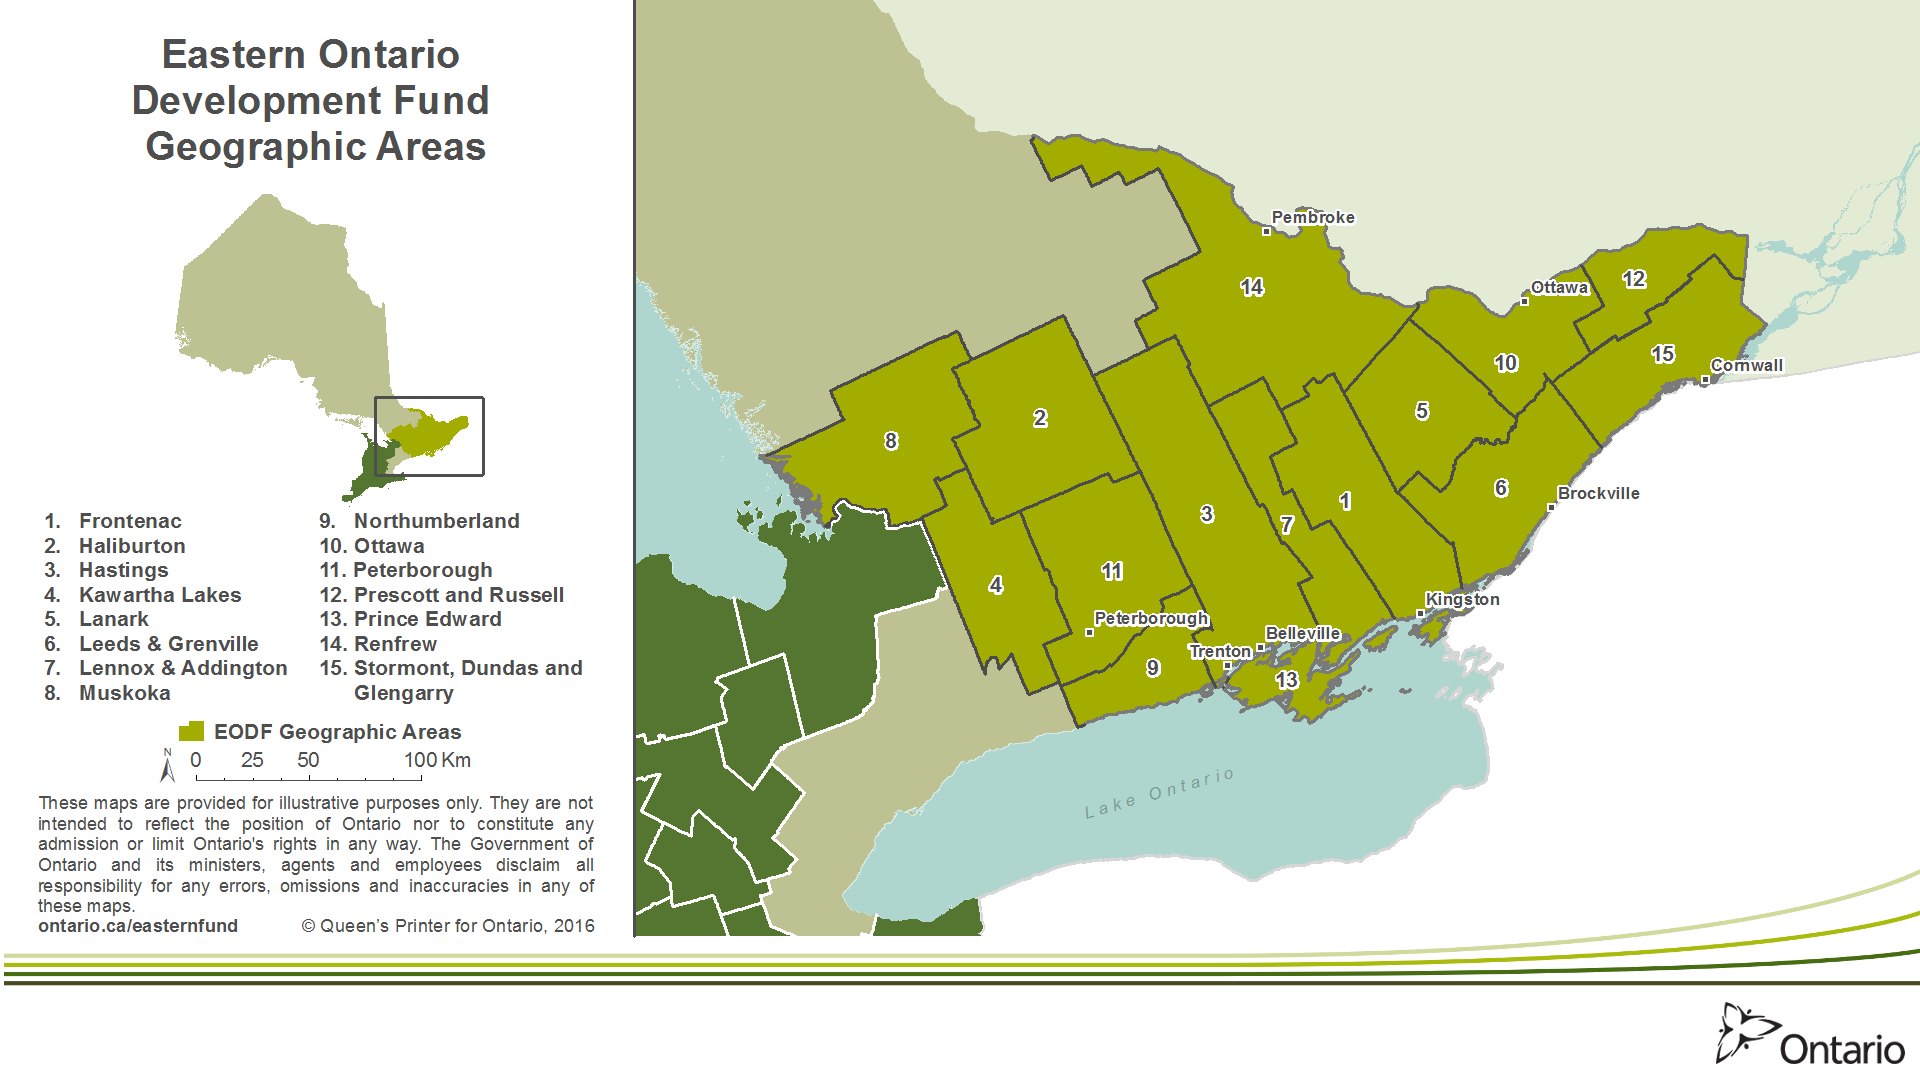 Figure 1 - The Eastern Ontario Region